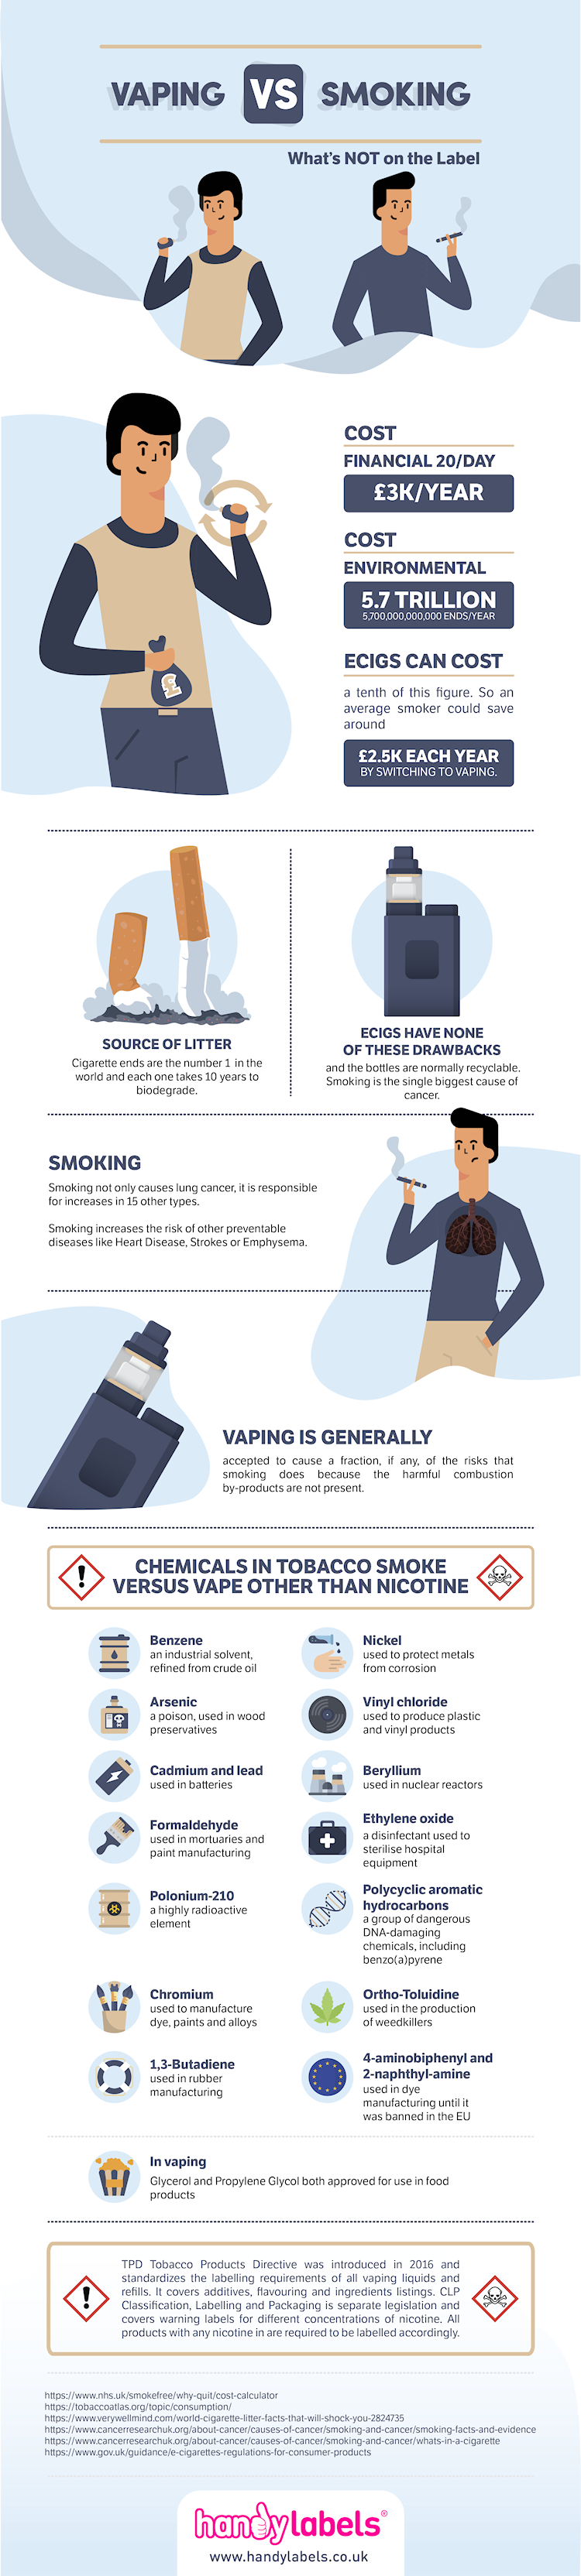 Vape versus Smoking infographic